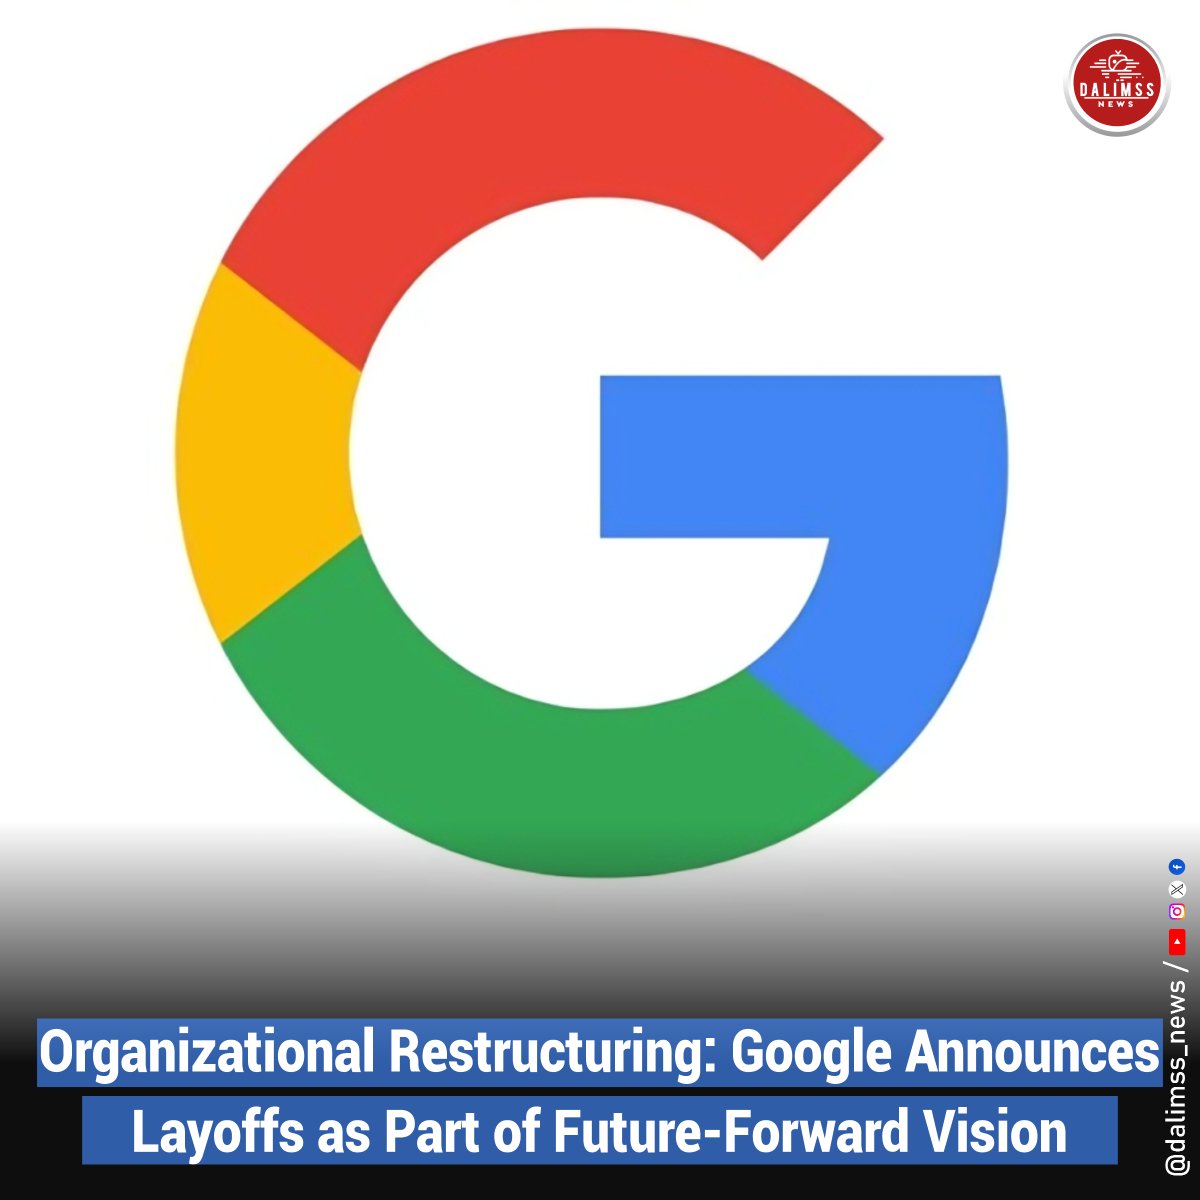 Organizational Restructuring: Google Announces Layoffs as Part of Future-Forward Vision

#Google #Layoffs #OrganizationalChanges #Innovation #CostCutting #ArtificialIntelligence